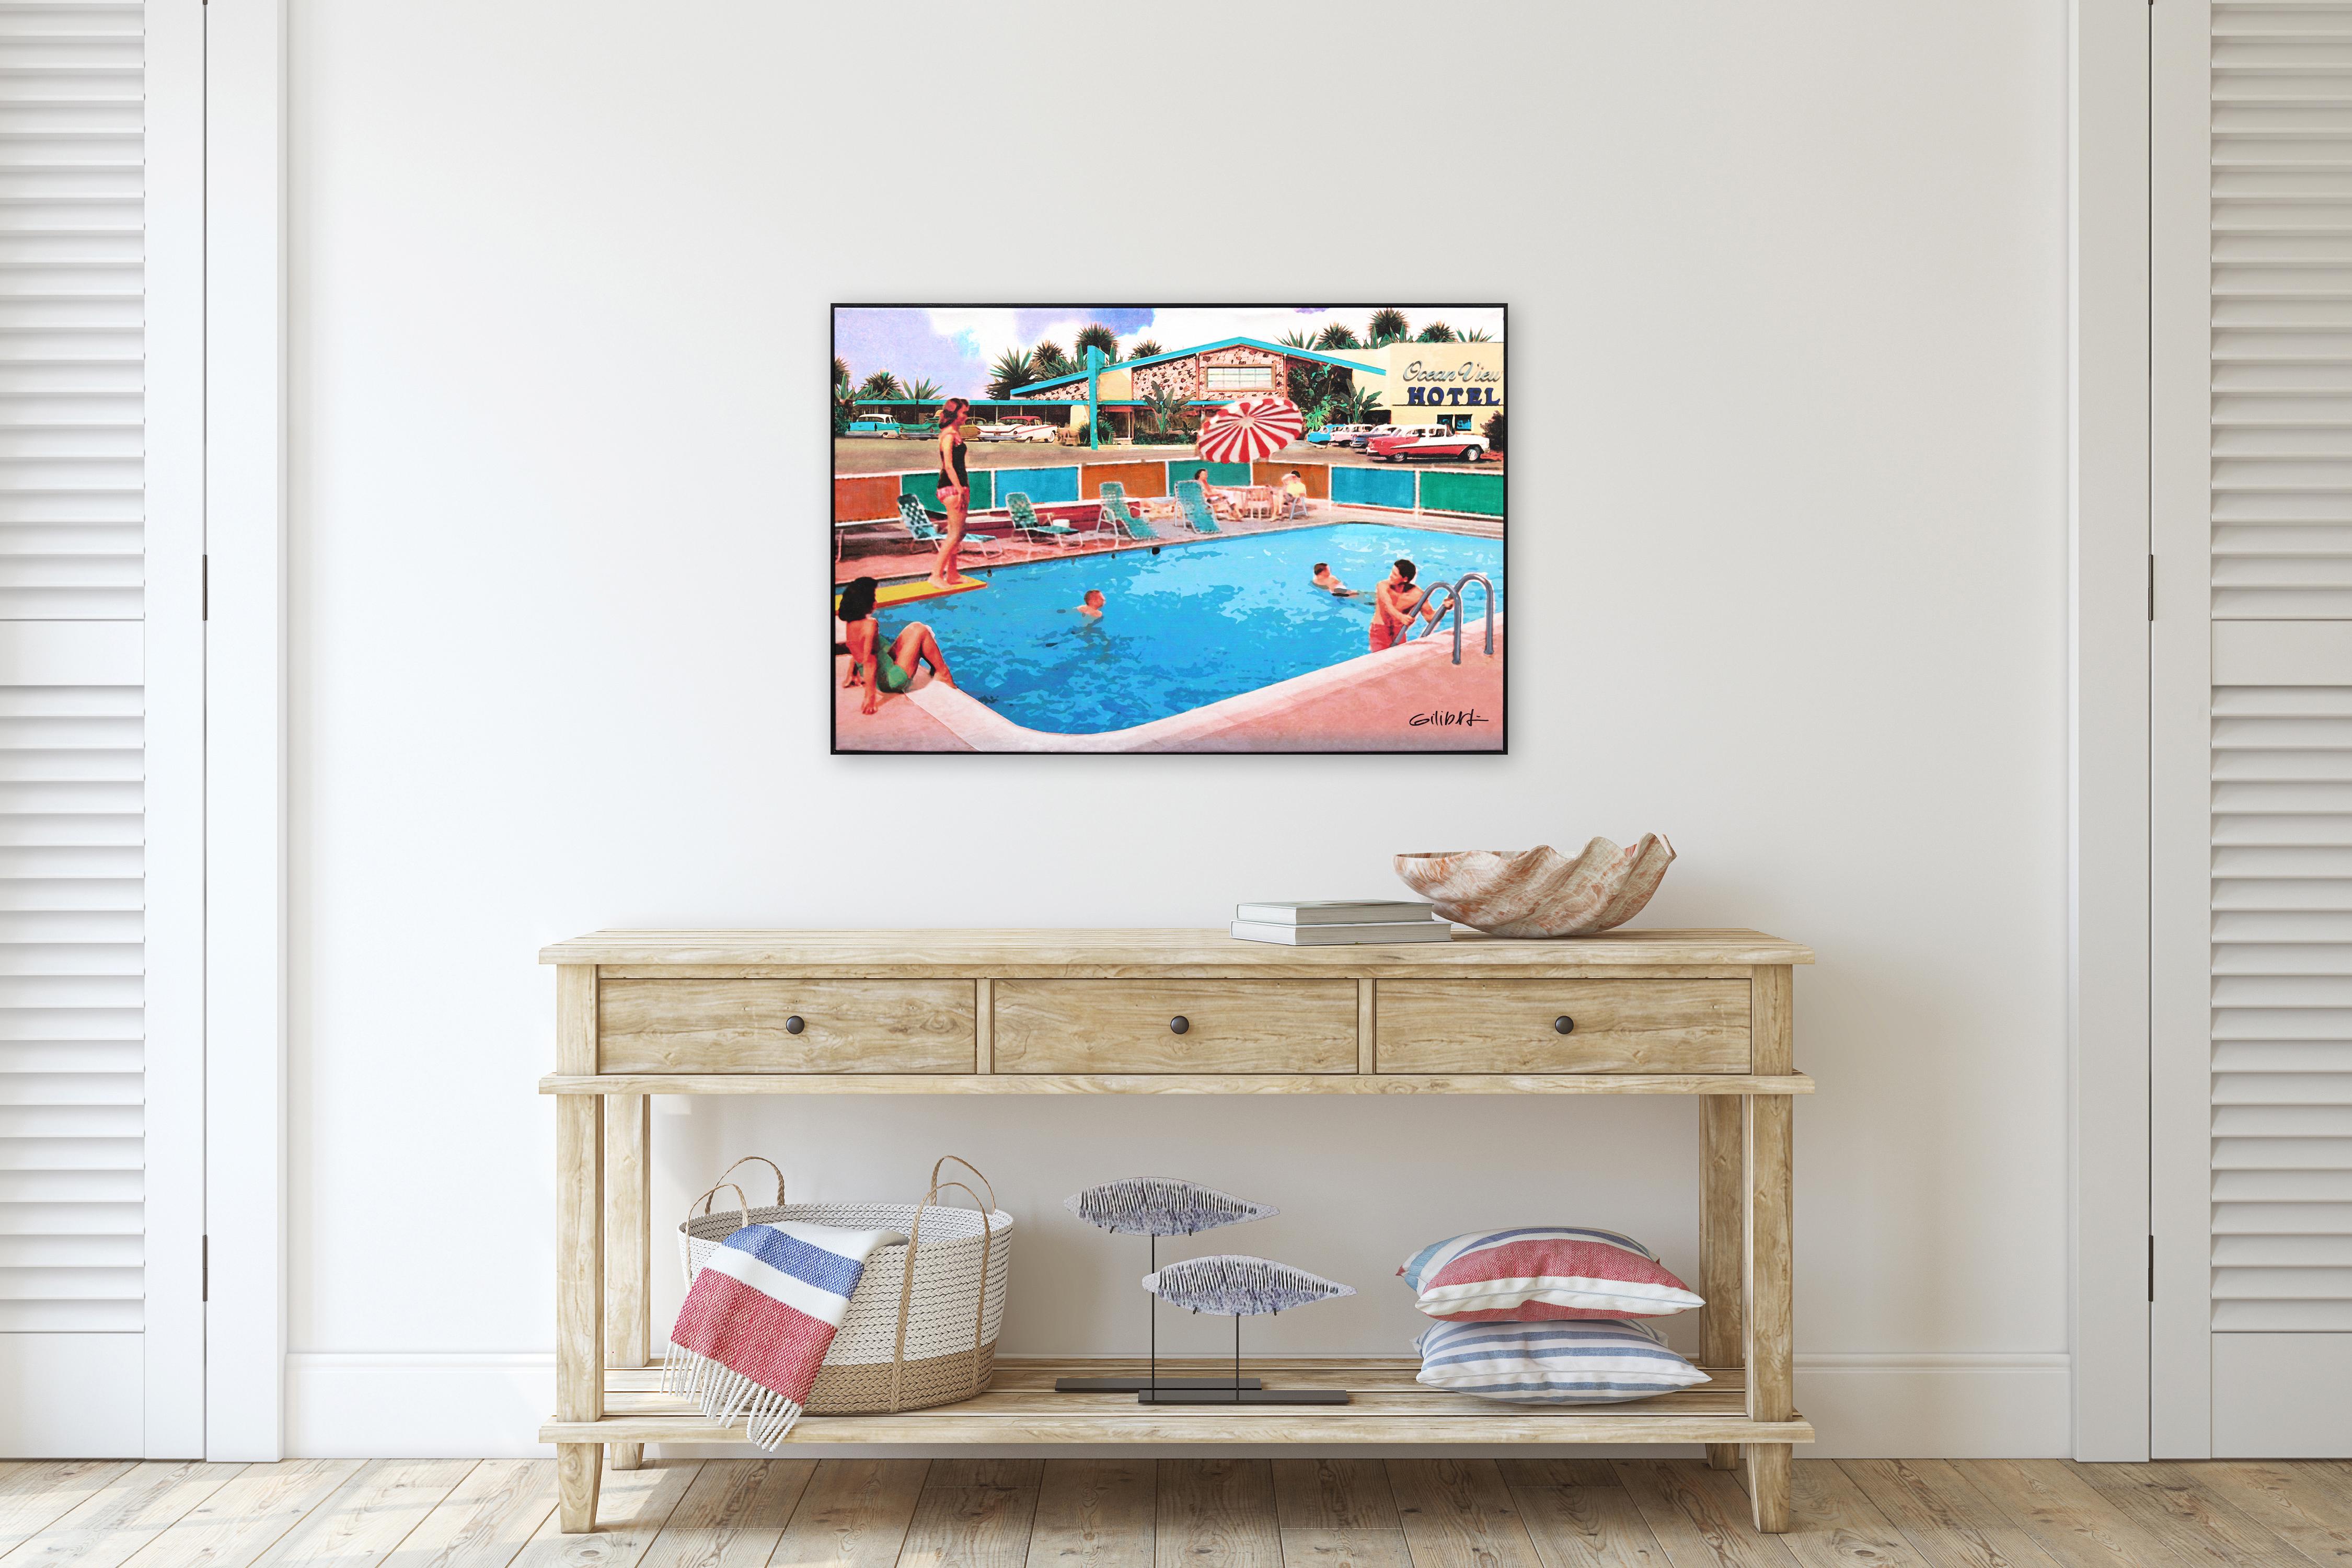 Poolside at the Ocean View - Framed Original Artwork Mid Century Modern Pool - Pop Art Mixed Media Art by Michael Giliberti